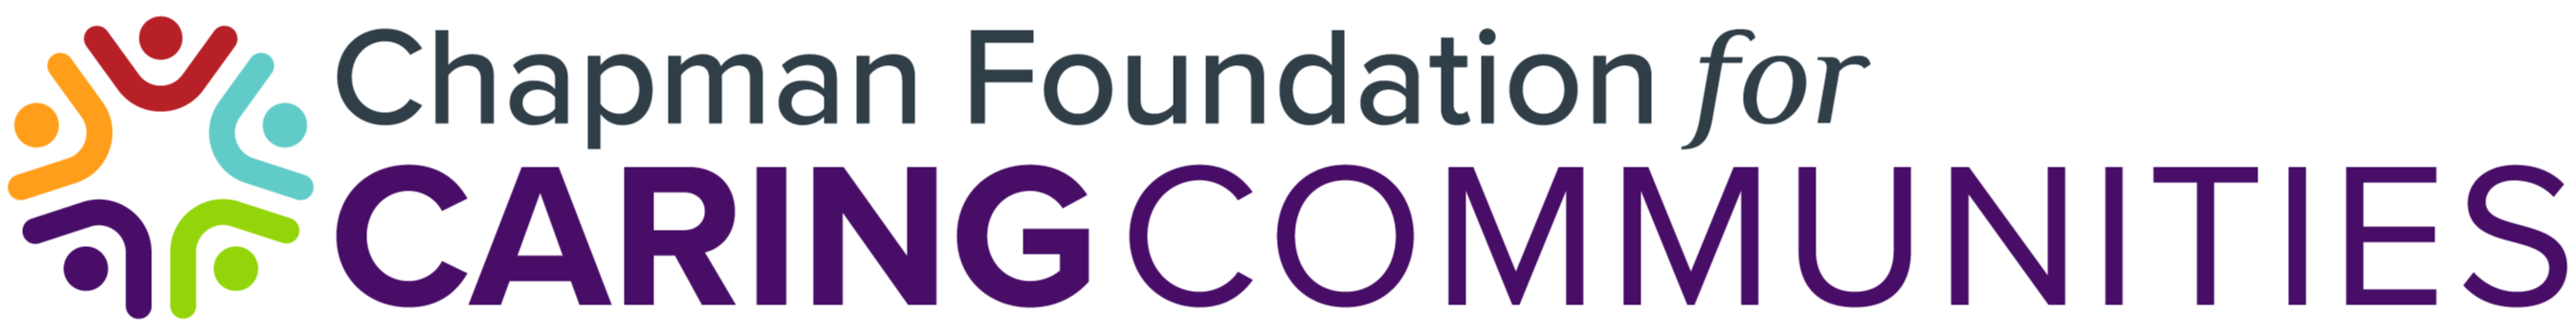 Chapman Foundation for Caring Communities Logo